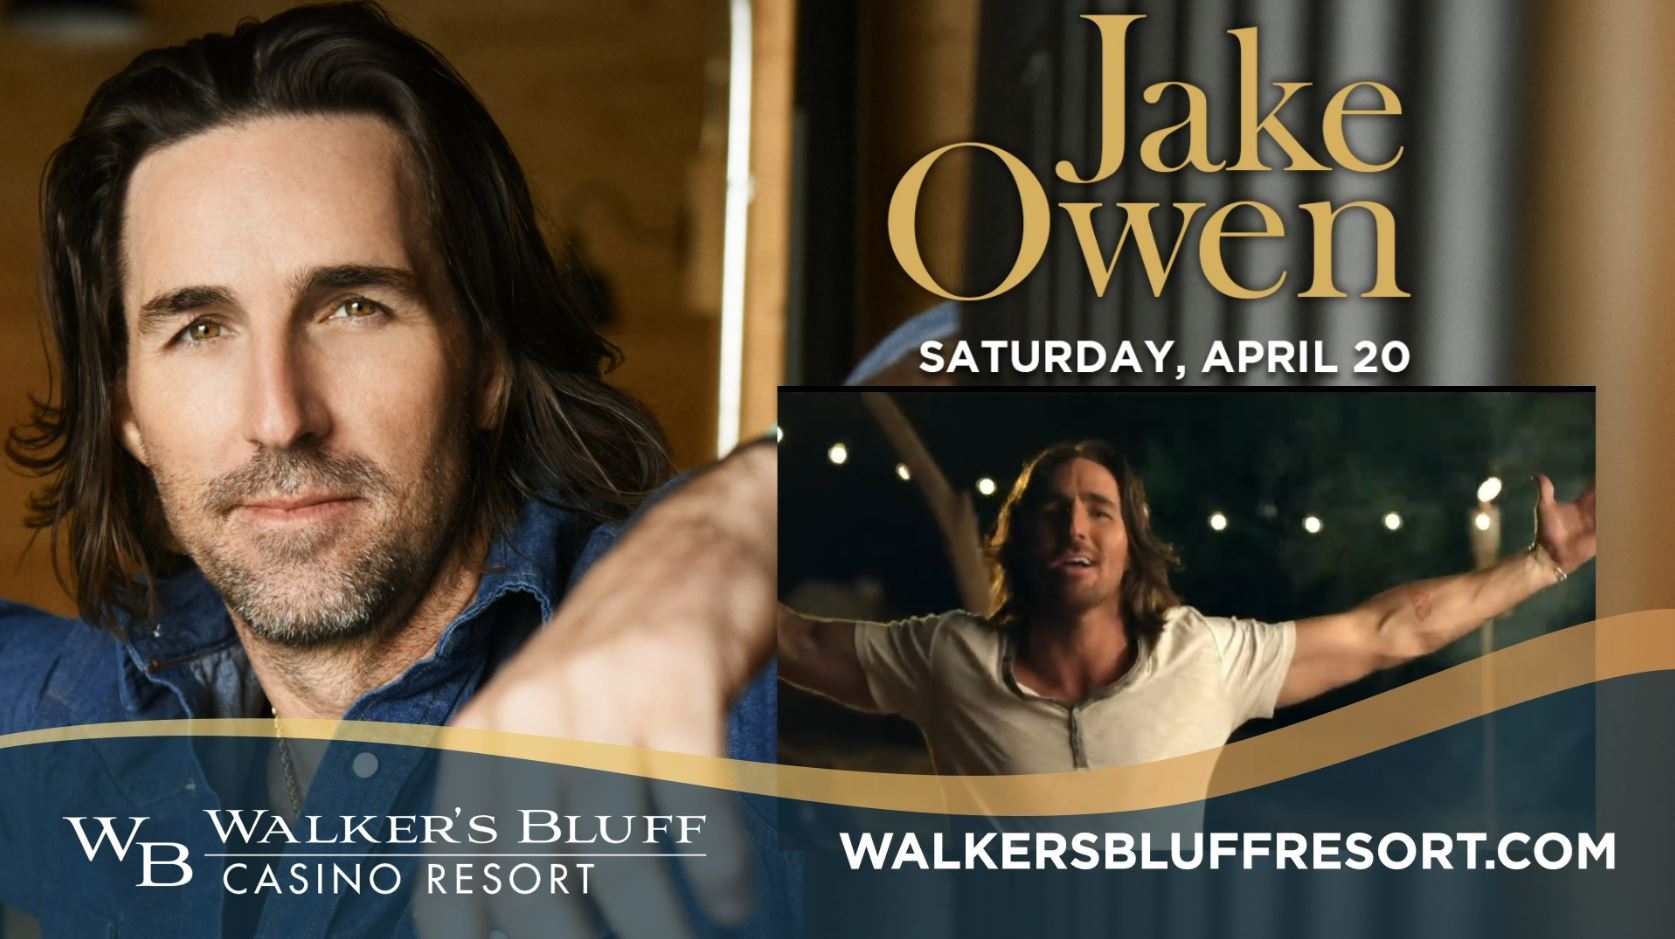 Jake Owen Concert Tickets At Walker's Bluff Casino Resort Giveaway